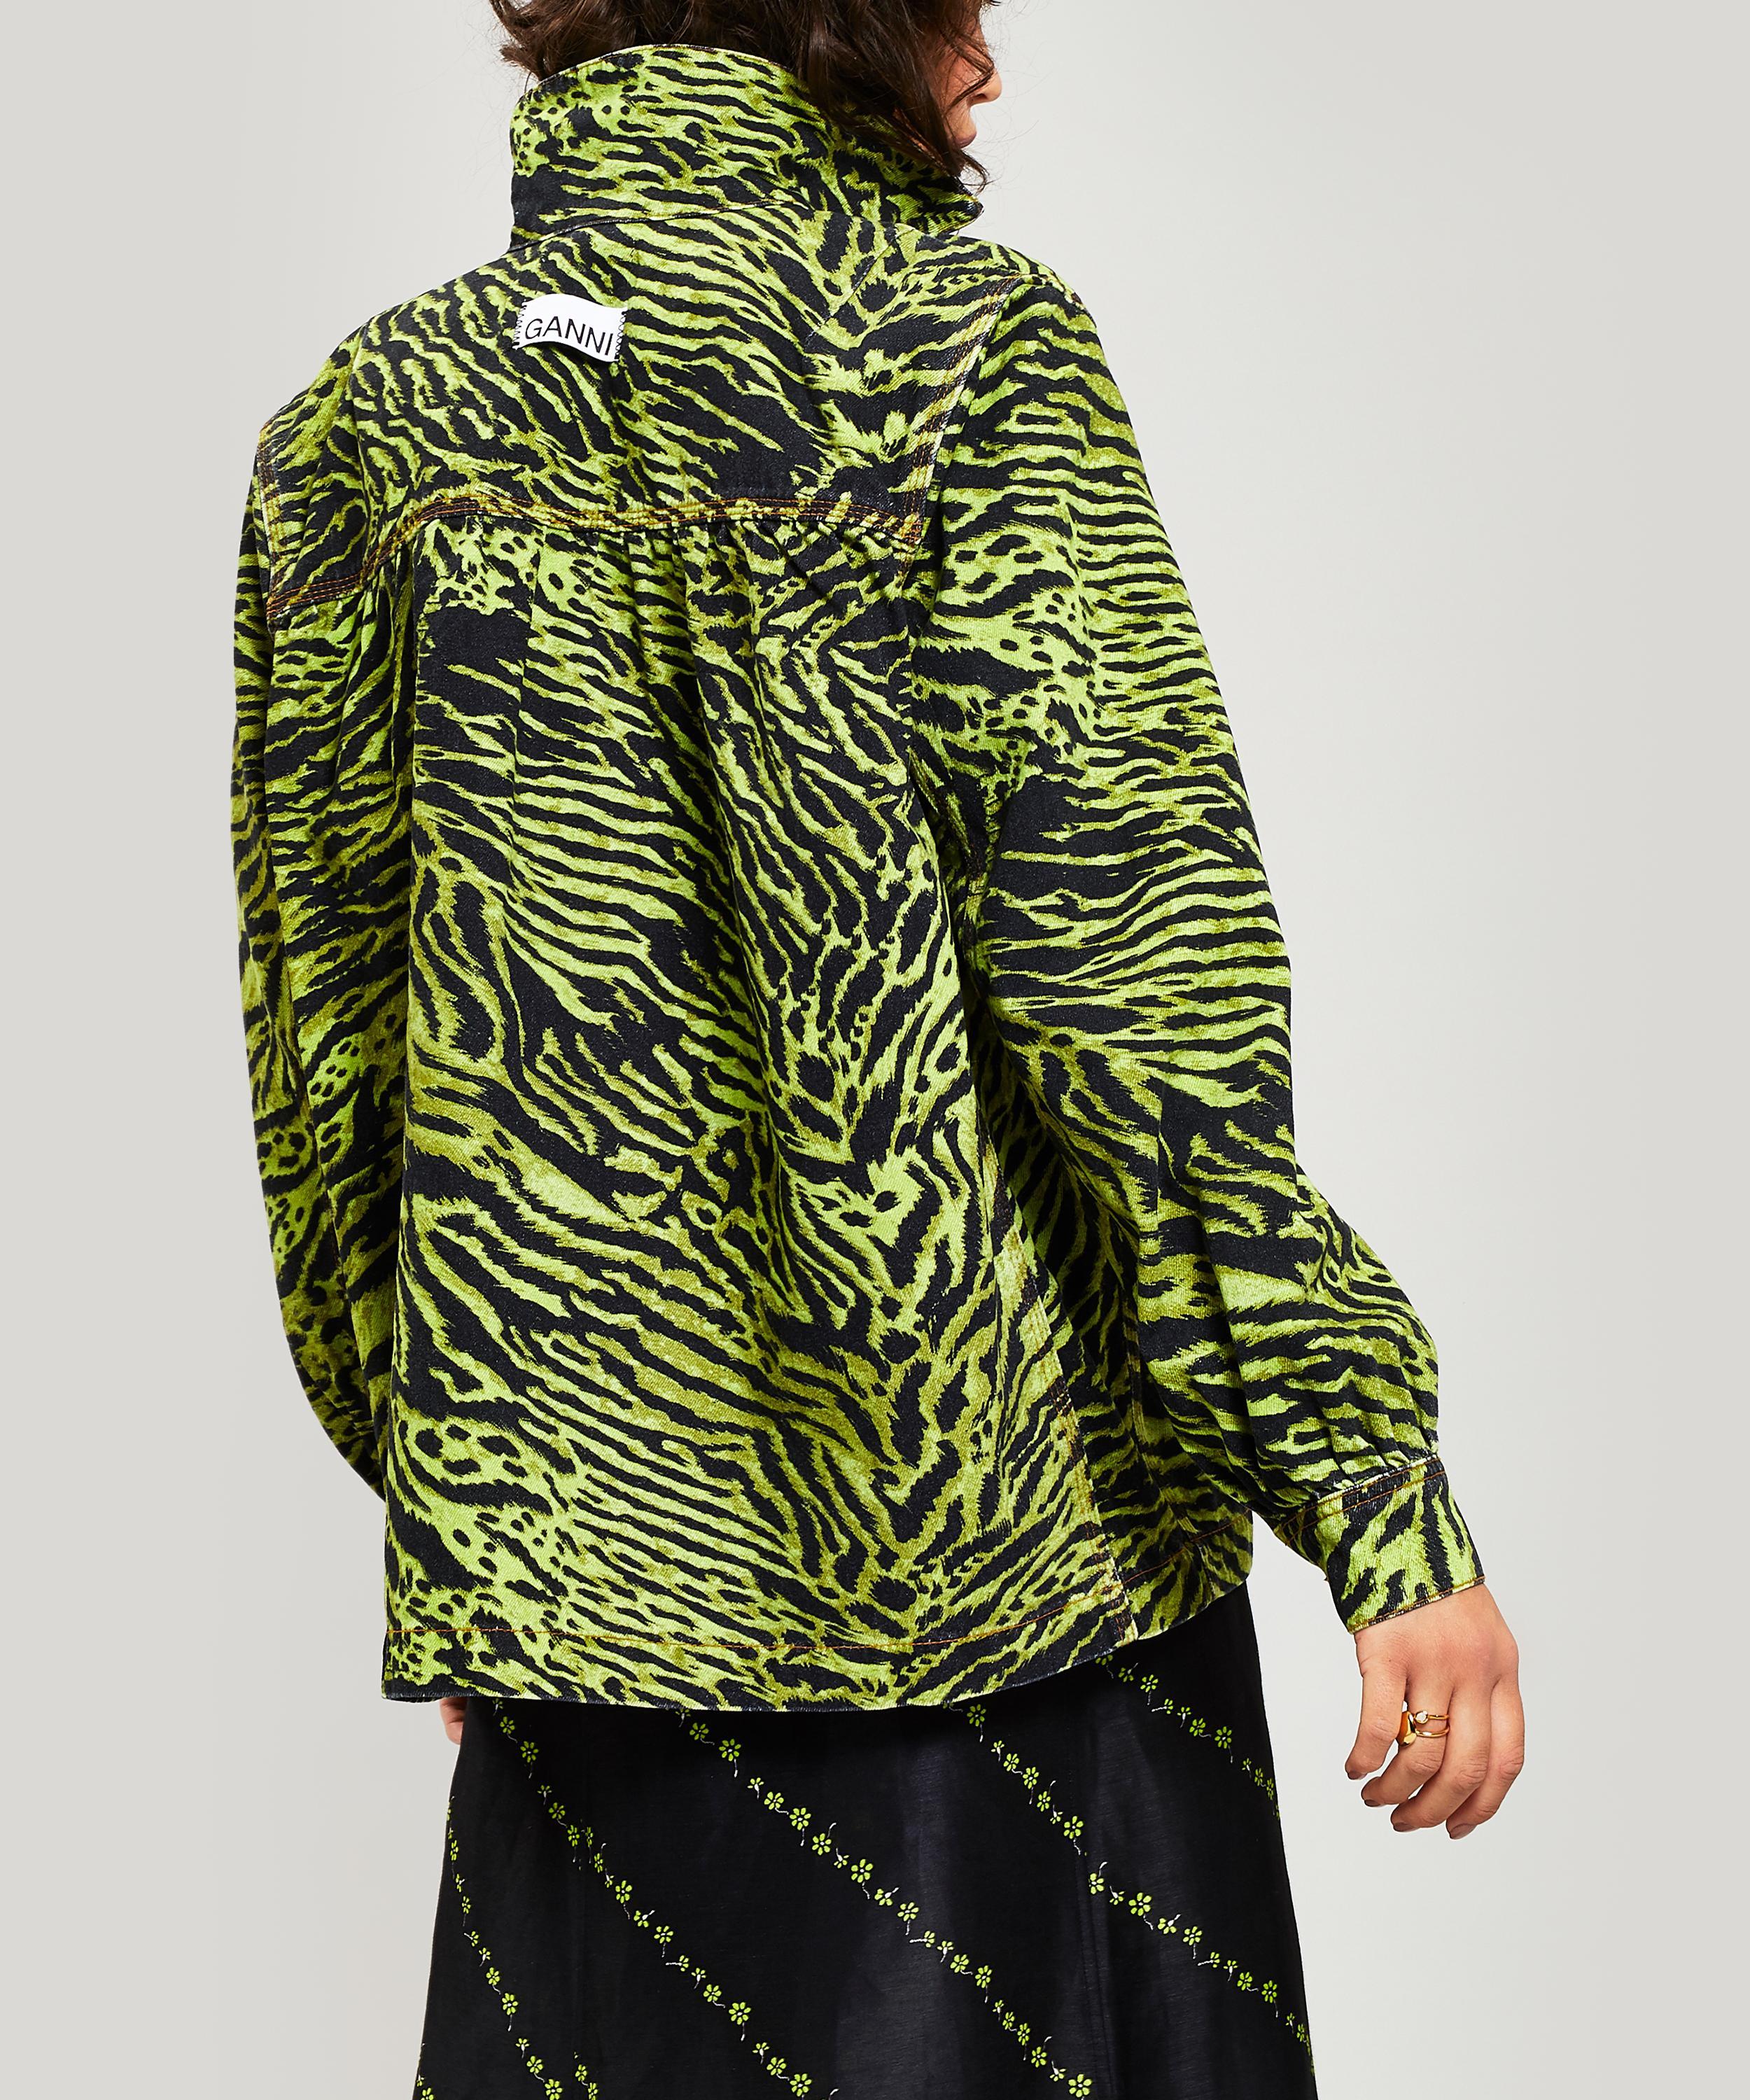 Ganni Tiger Print Denim Jacket in Lime Tiger (Green) | Lyst Australia